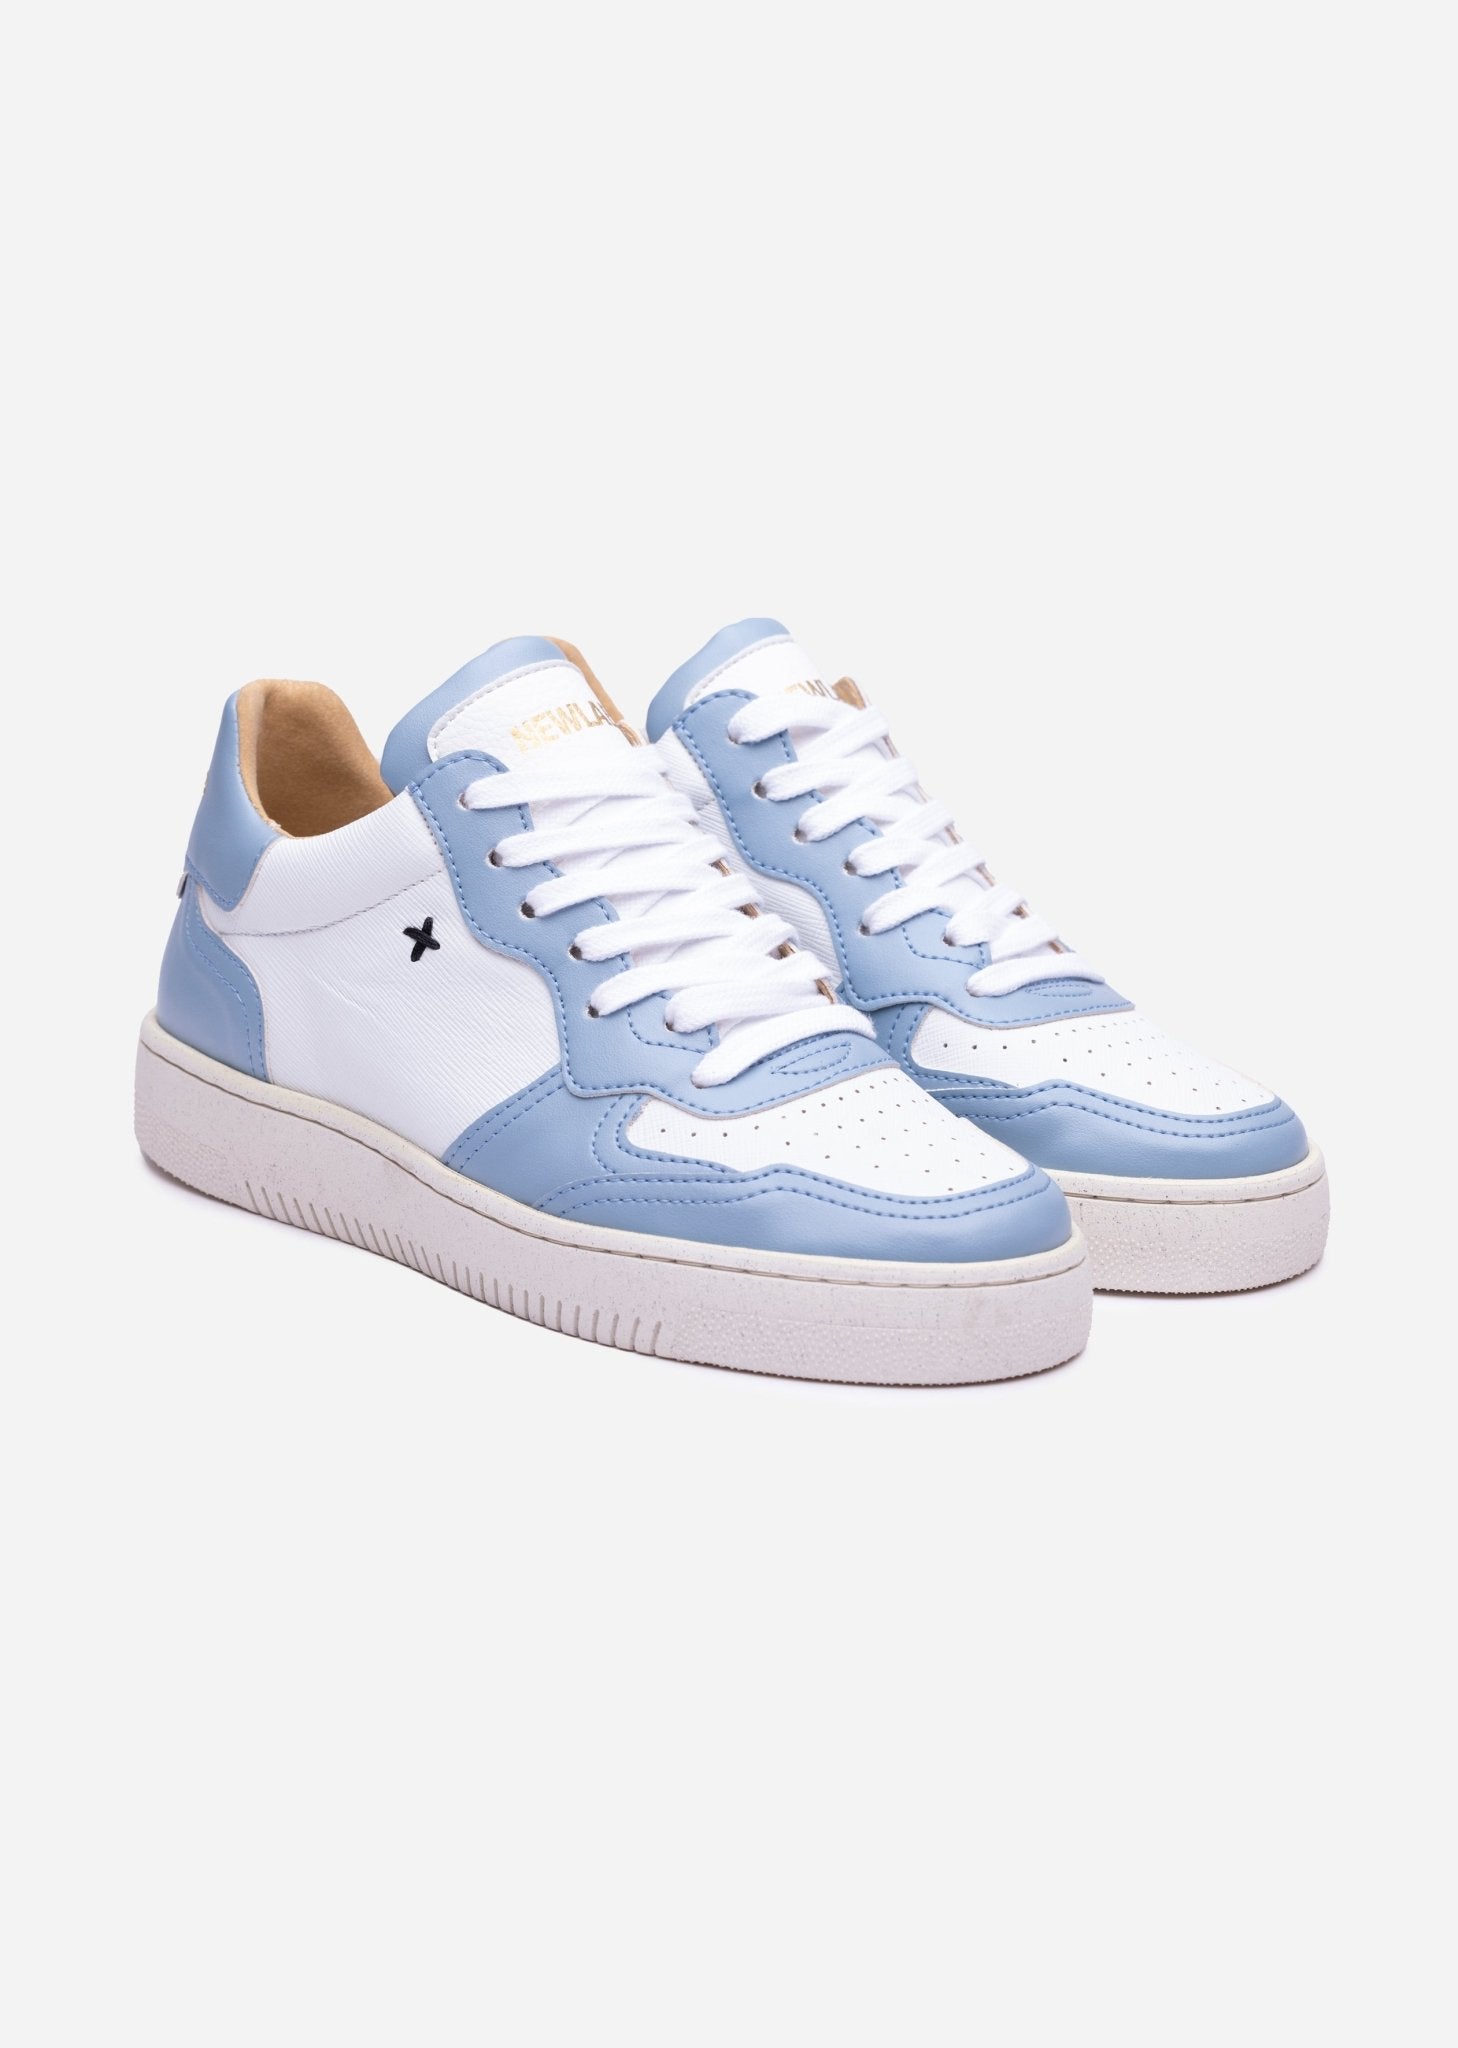 NL11 Light Blue/White - NEWLAB - Chaussures - NEWLAB